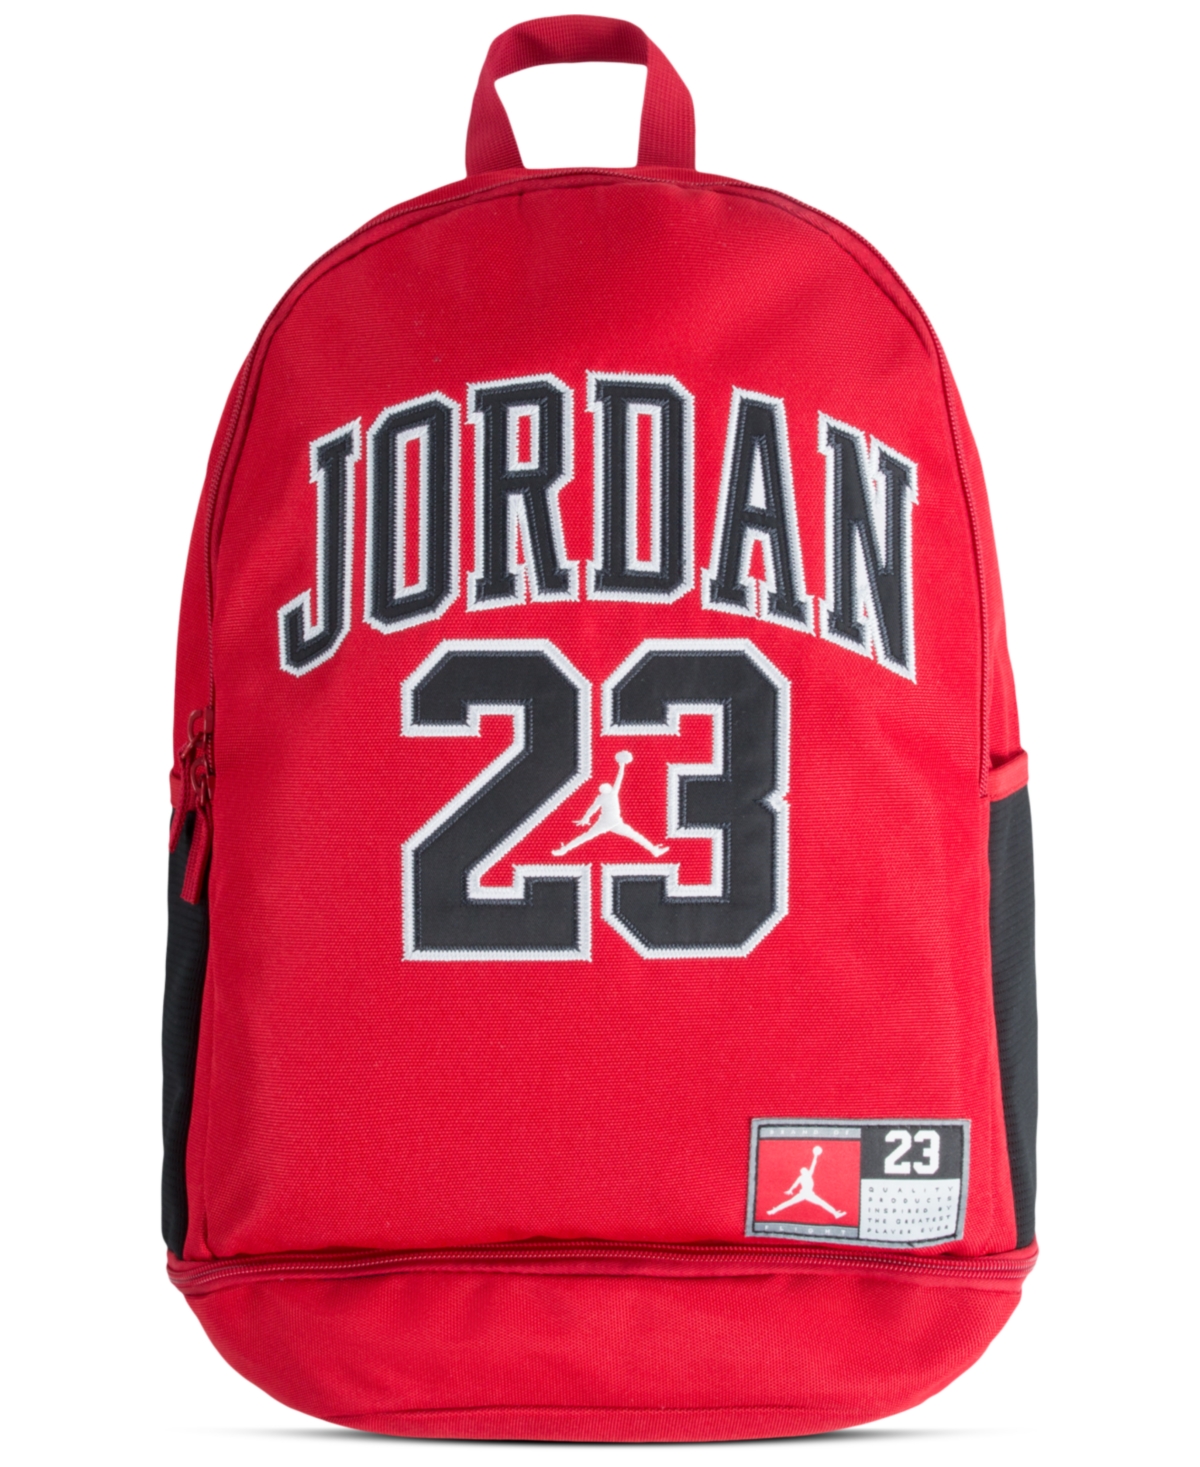 Nike Jordan Jersey Backpack In Gym Red